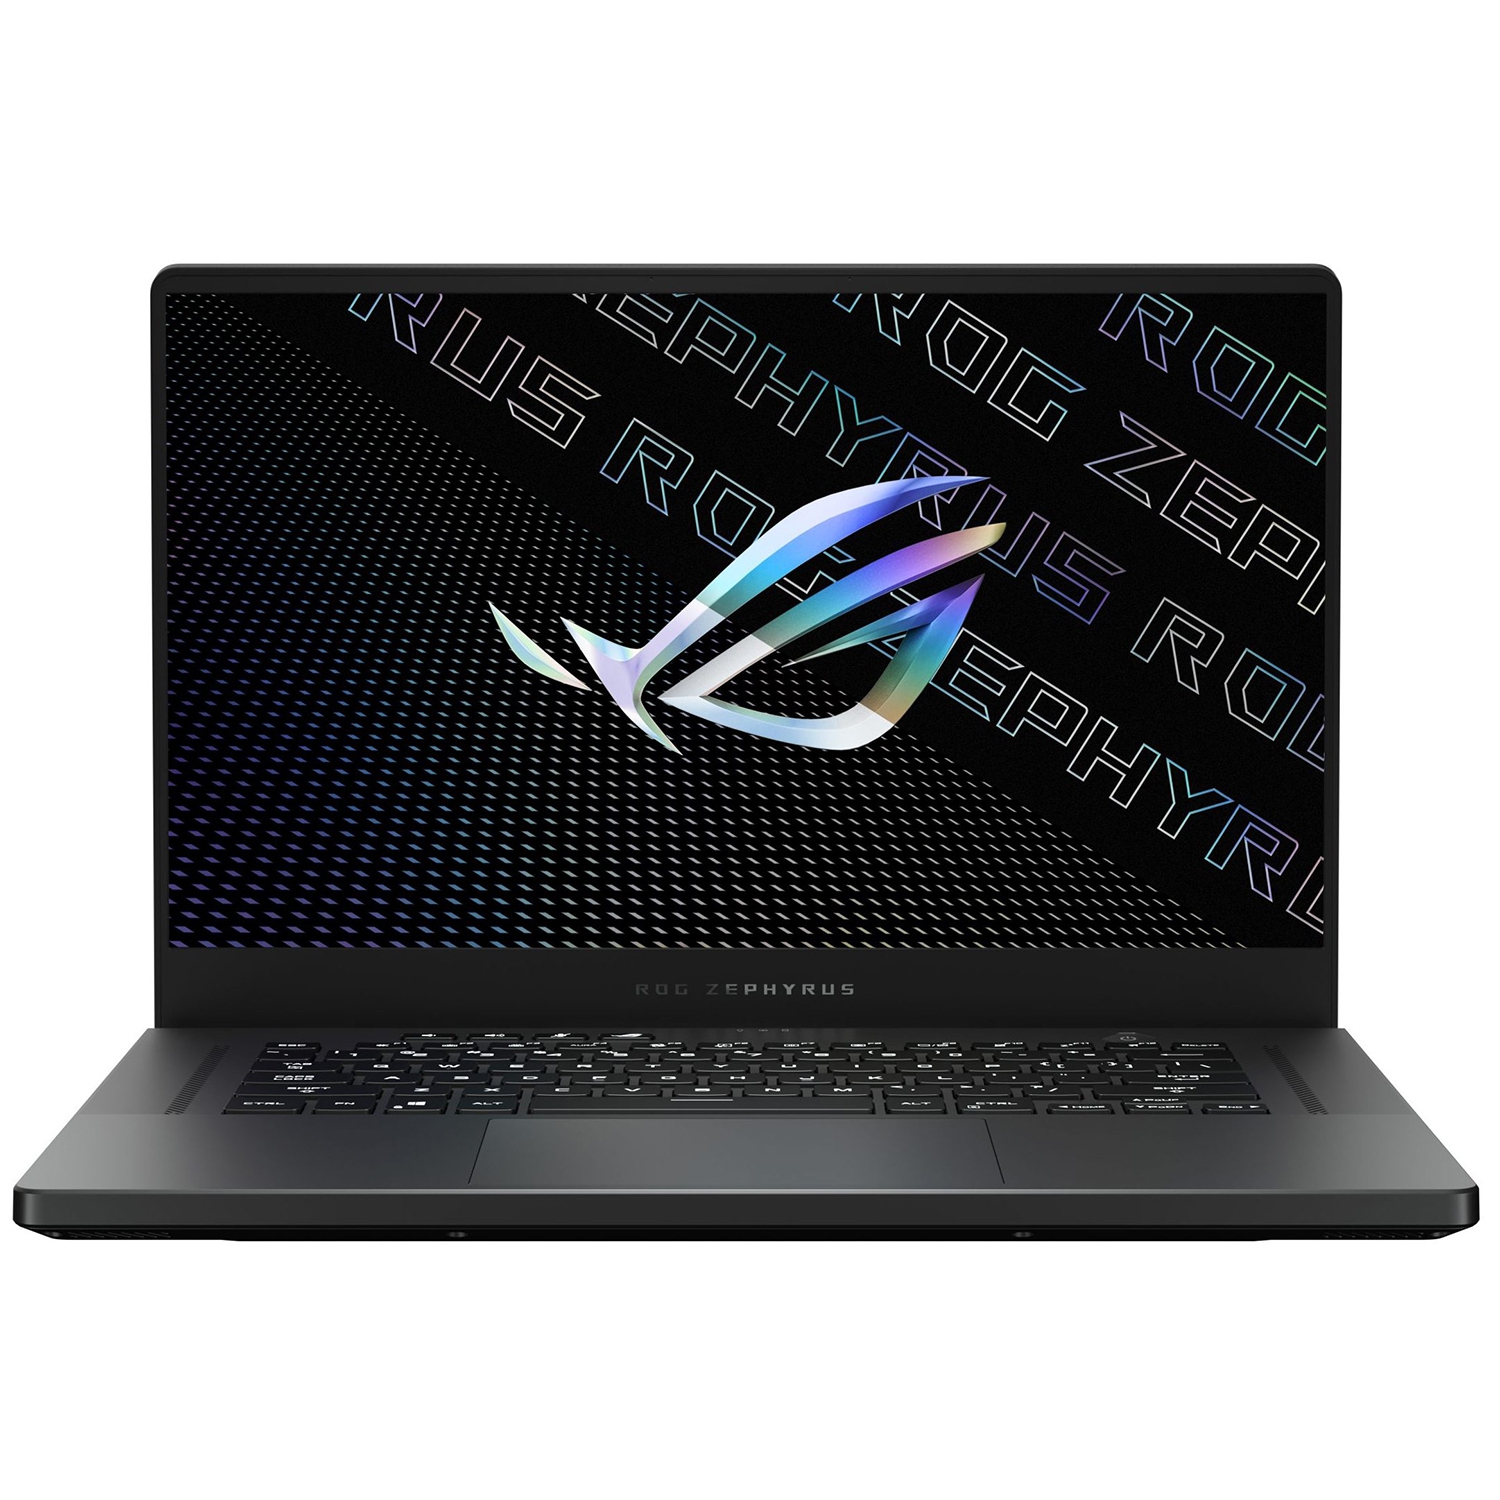 Custom ASUS ROG Zephyrus G15 Laptop (AMD Ryzen 9 5900HS, 40GB RAM, 2TB PCIe SSD, NVIDIA RTX 3060, Win 10 Pro)